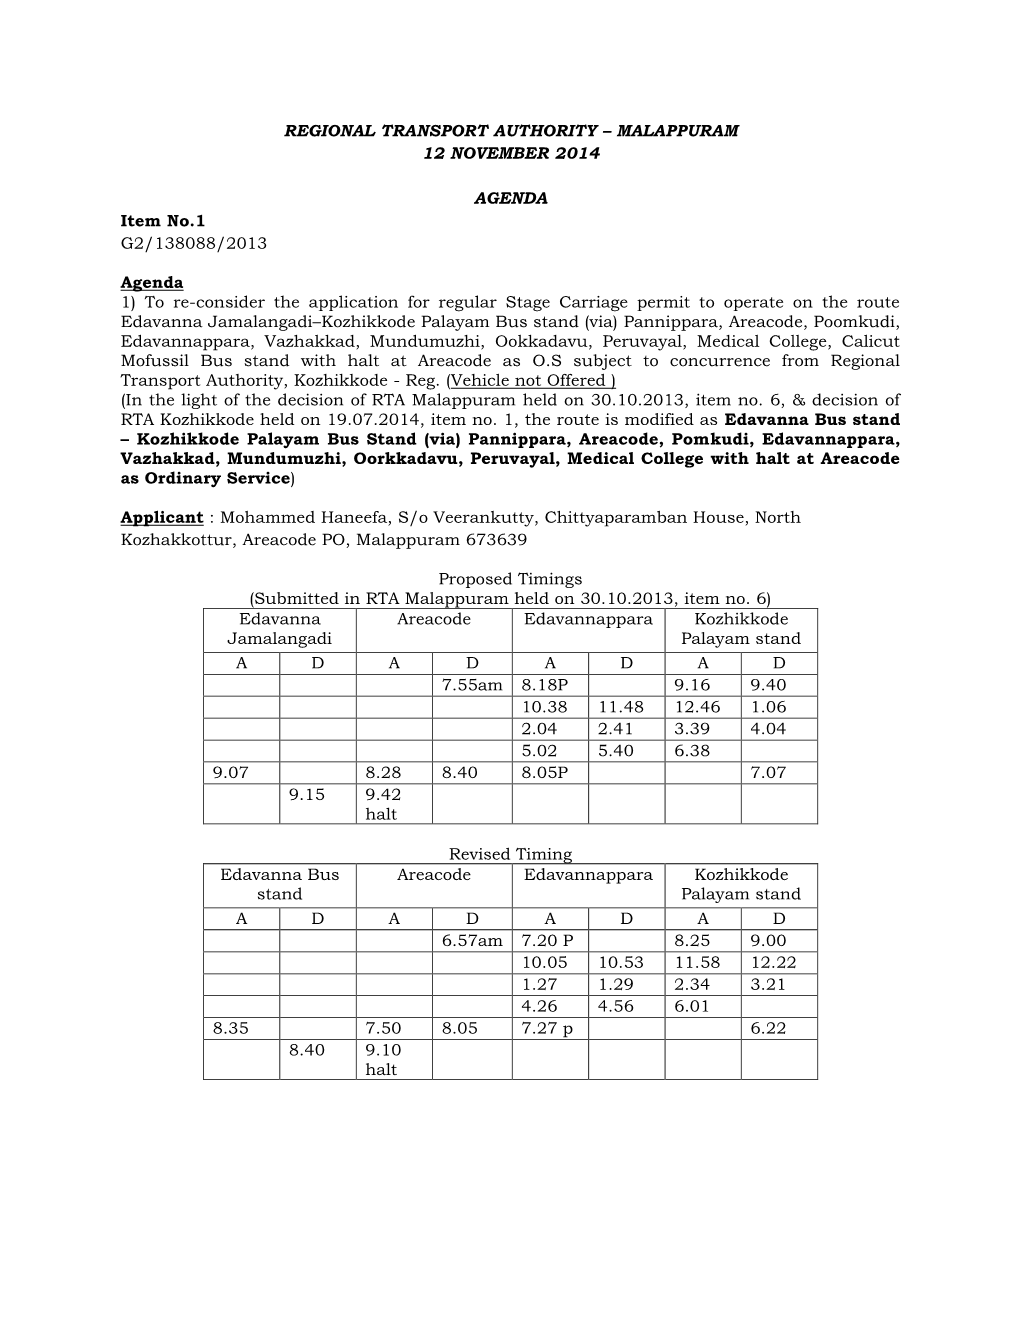 Regional Transport Authority – Malappuram 12 November 2014